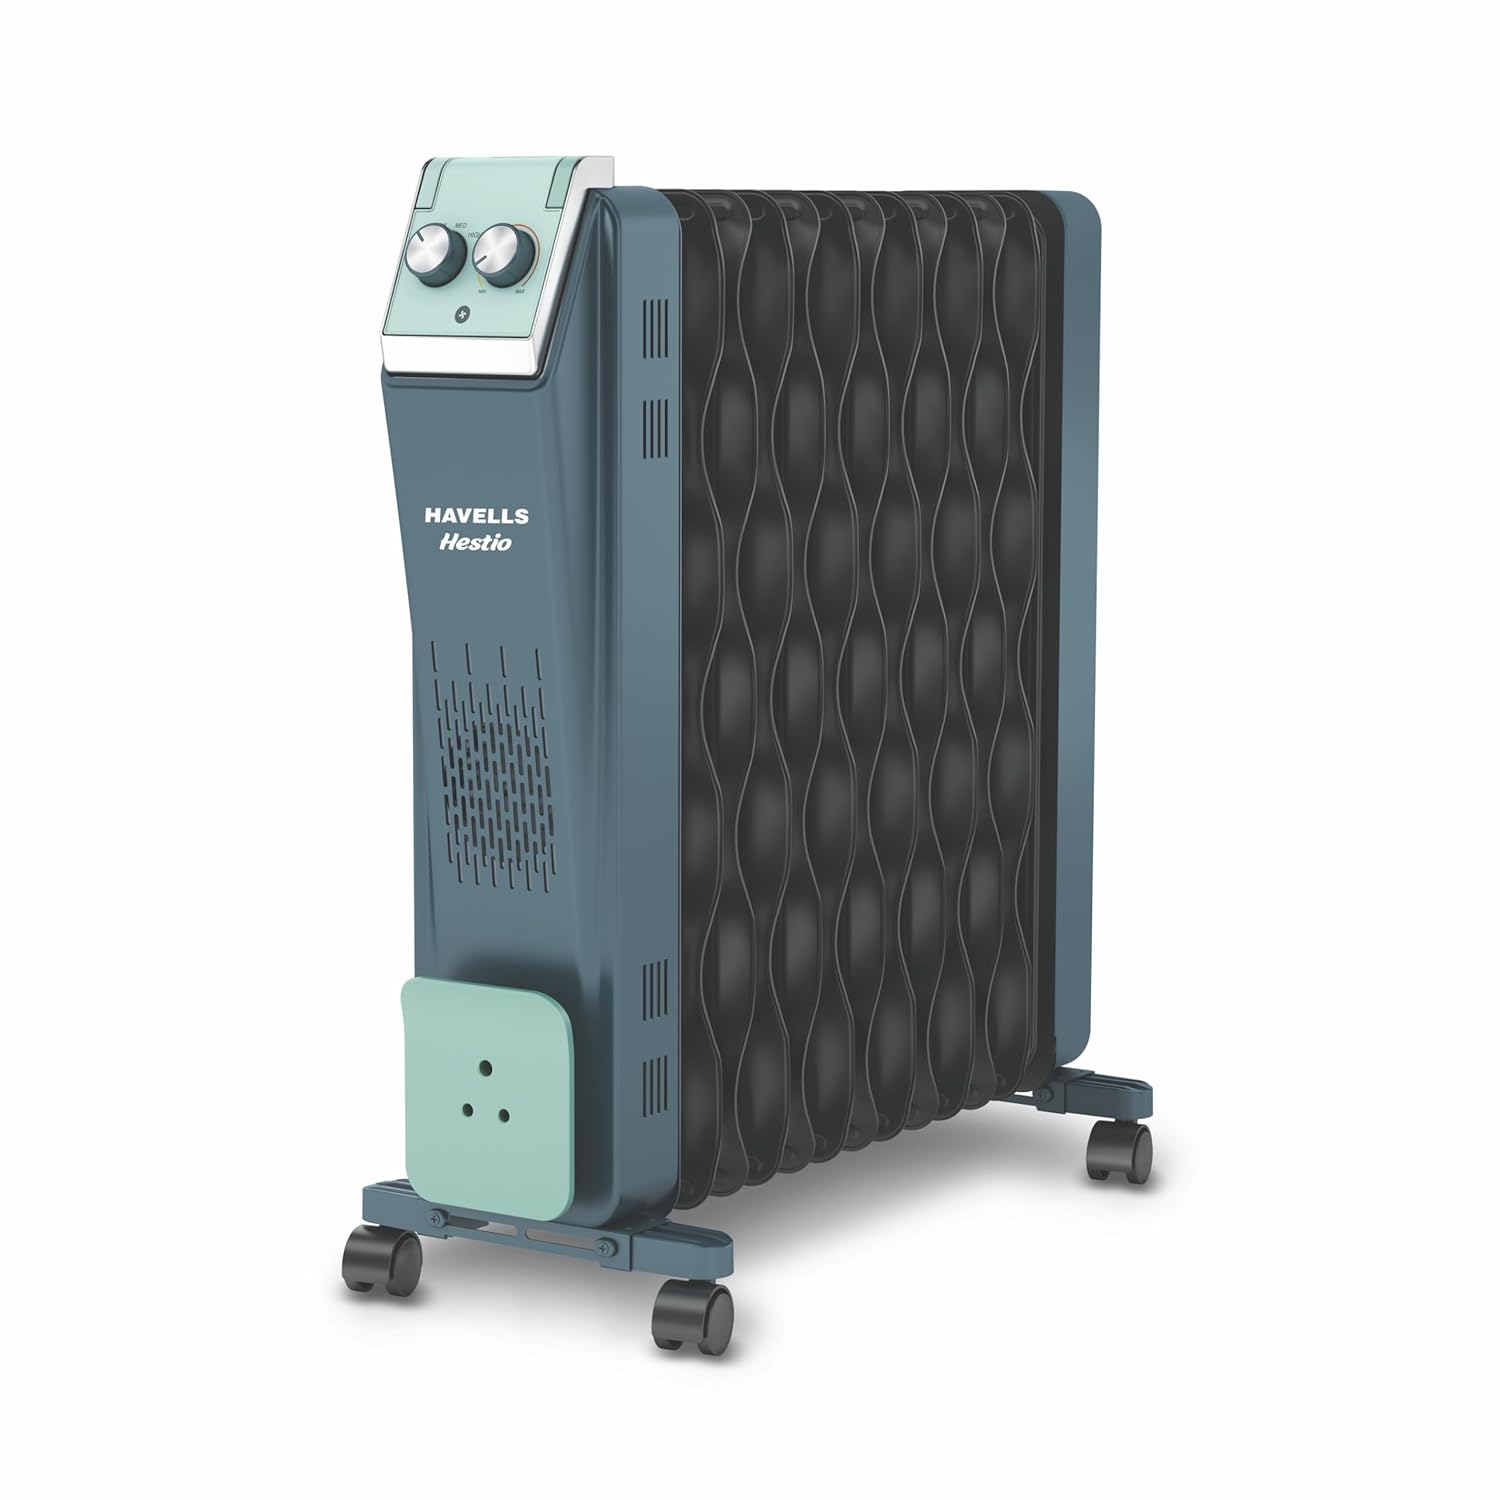 Havells GHROFCLN290 Hestio 13 Wave Fin OFR 2900 Watt with 3 Heat Setting "1000W/1500W/2500W" & PTC Heater 400W (Blue & Black) - Mahajan Electronics Online